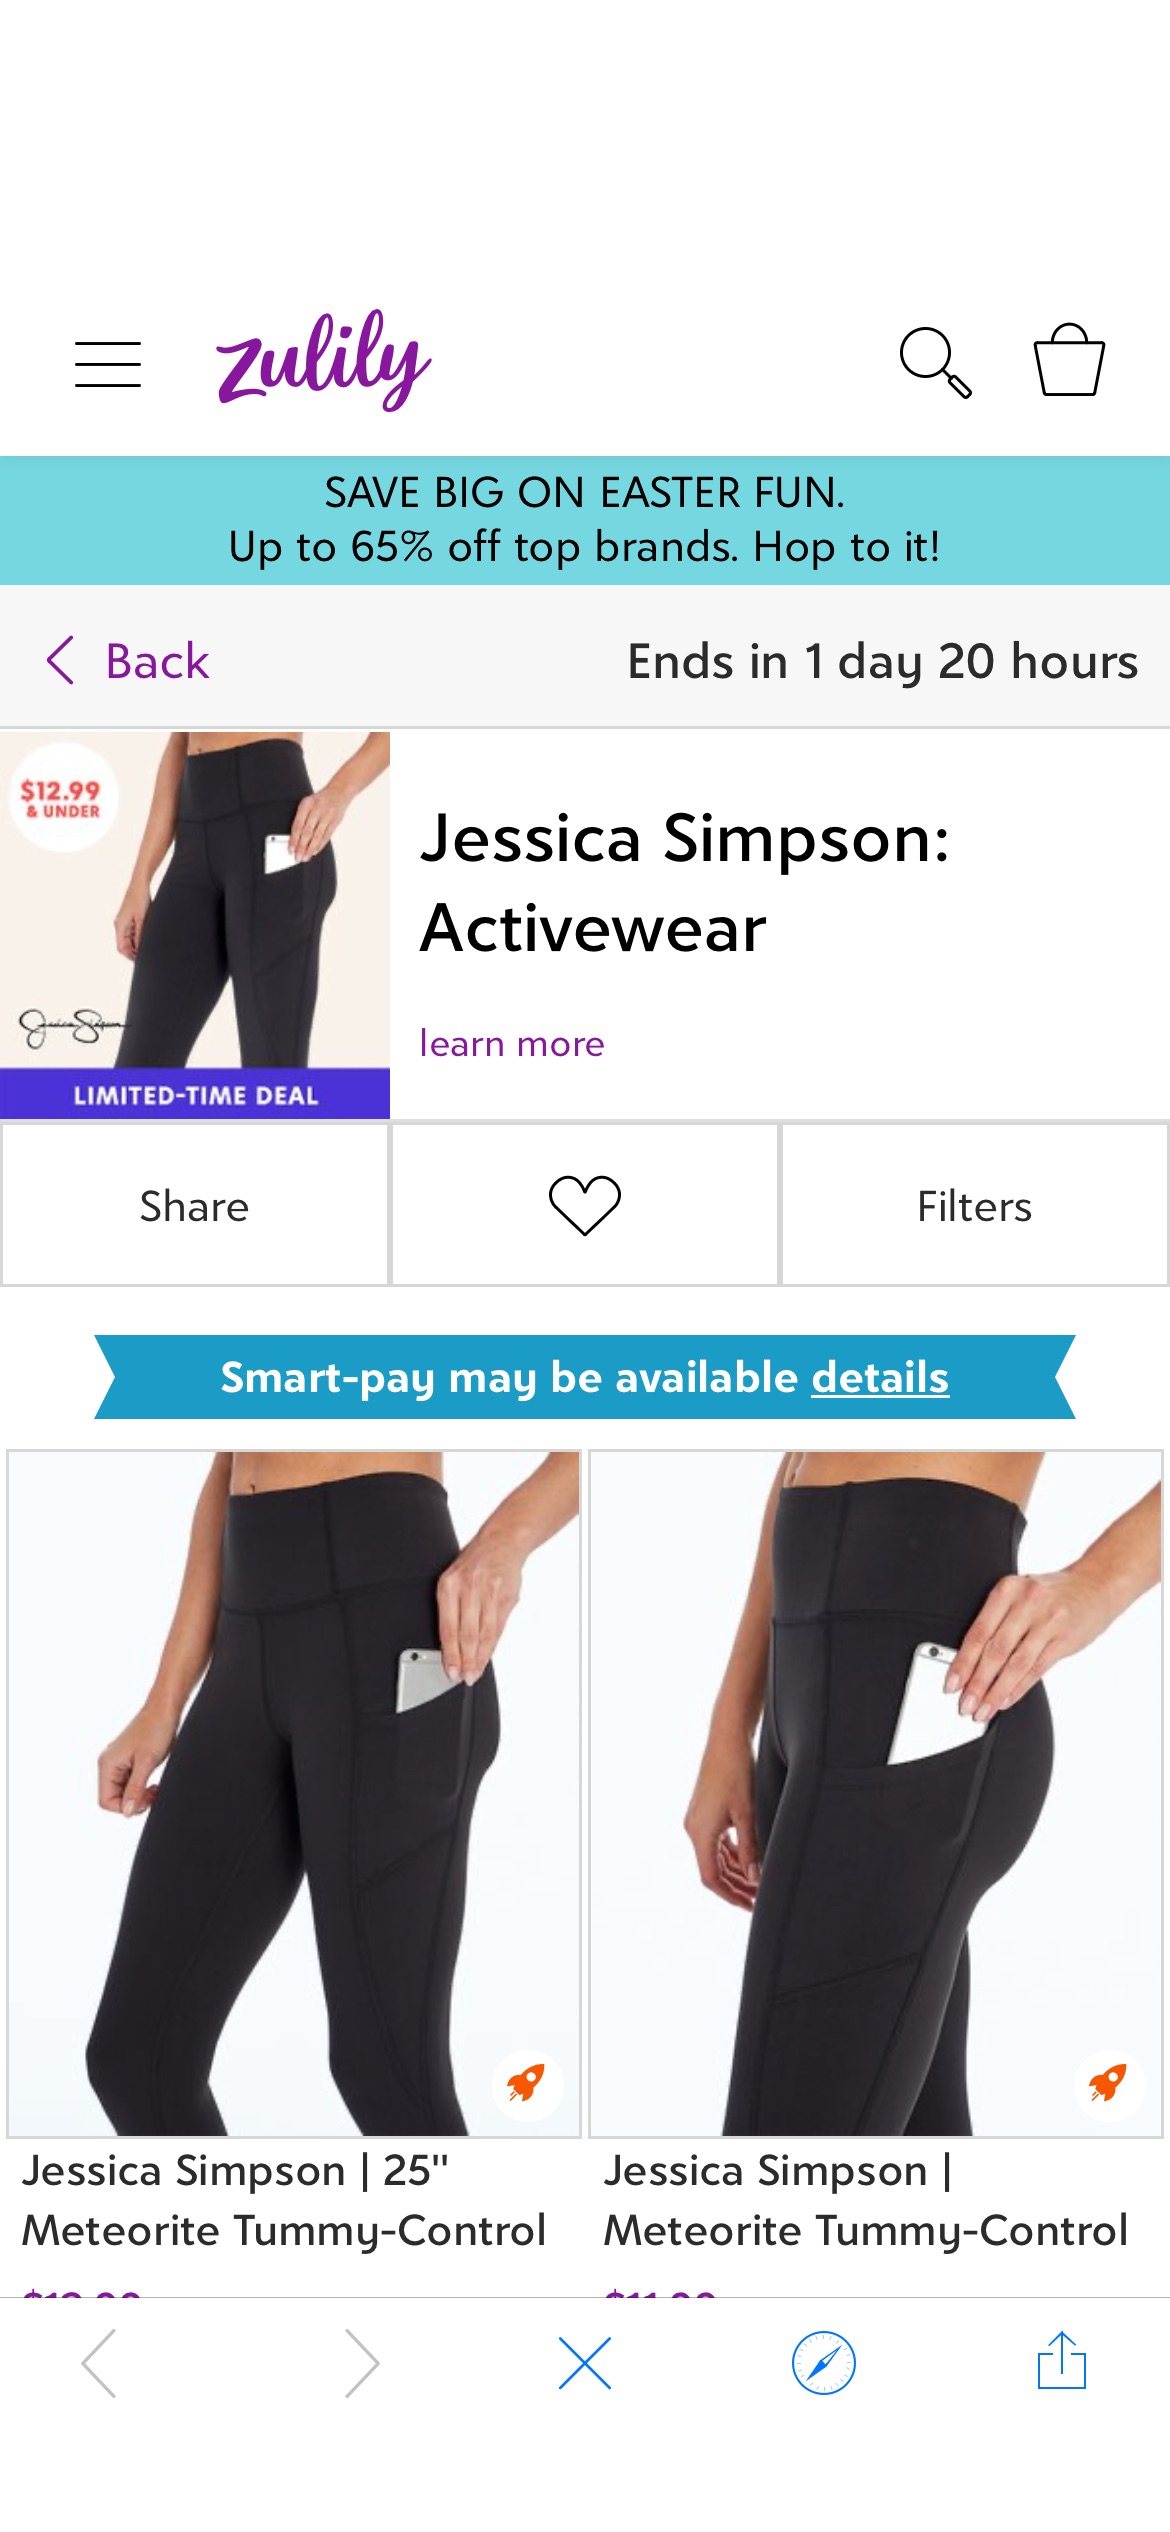 Jessica Simpson: Activewear | Zulily $12.99或以下